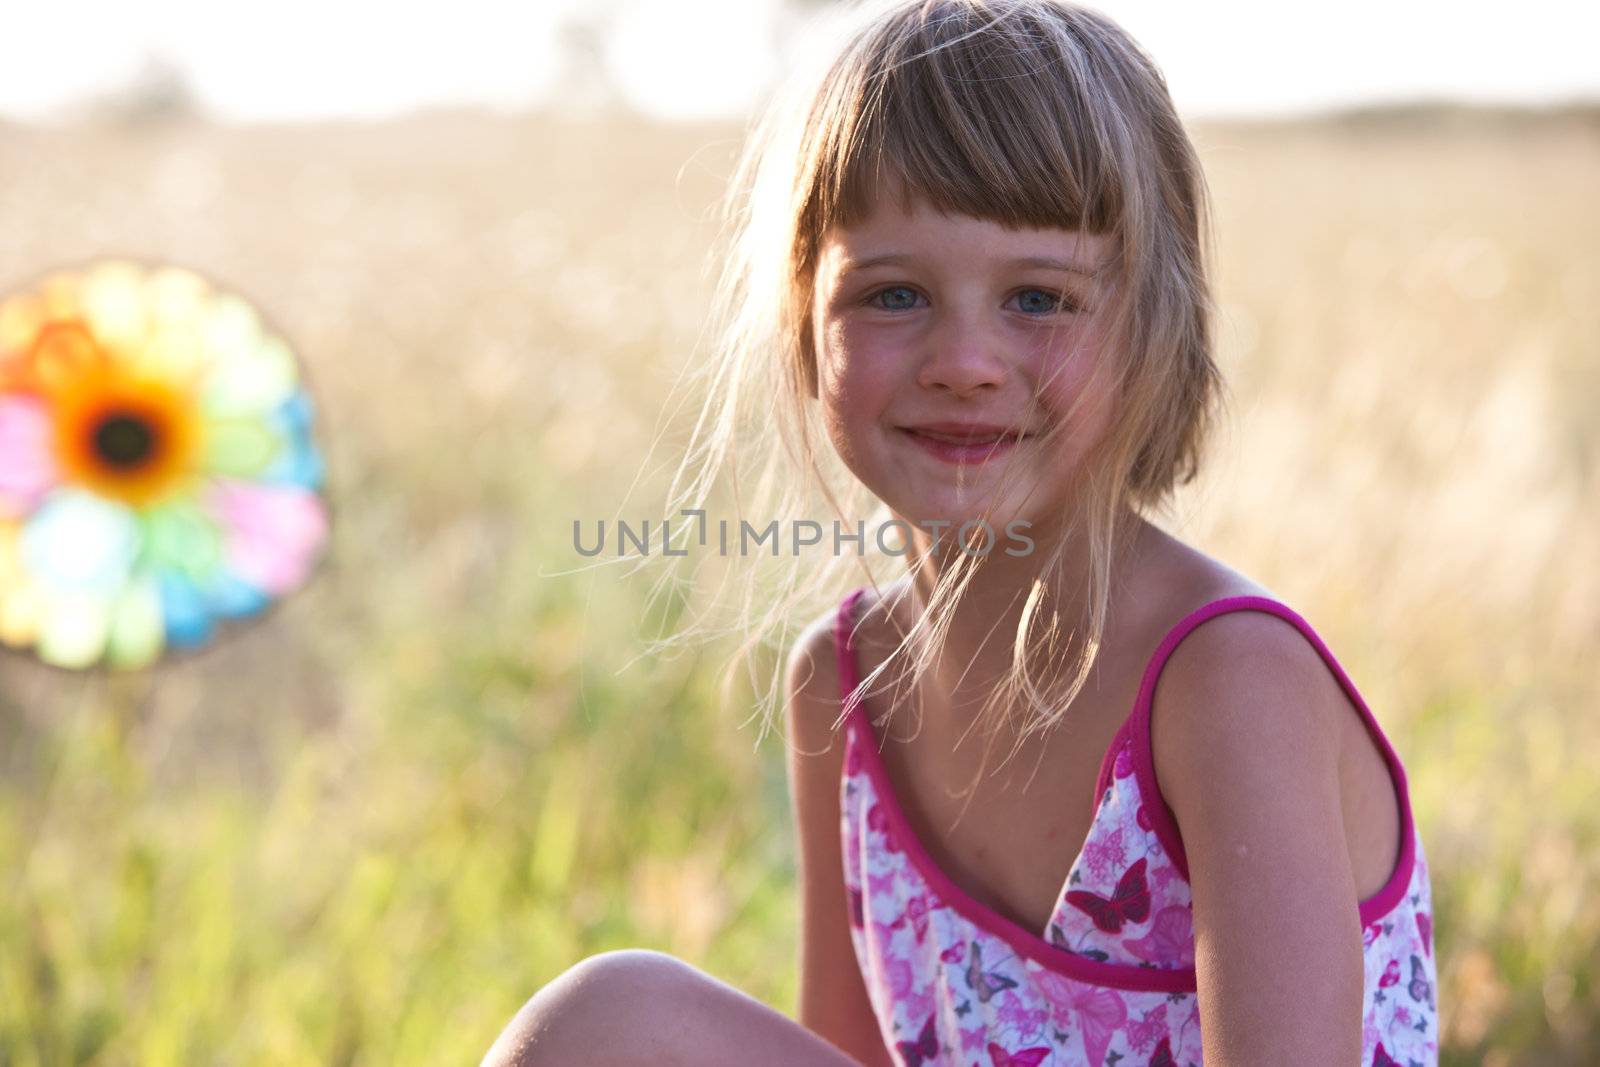 people series: little summer girl on meadow